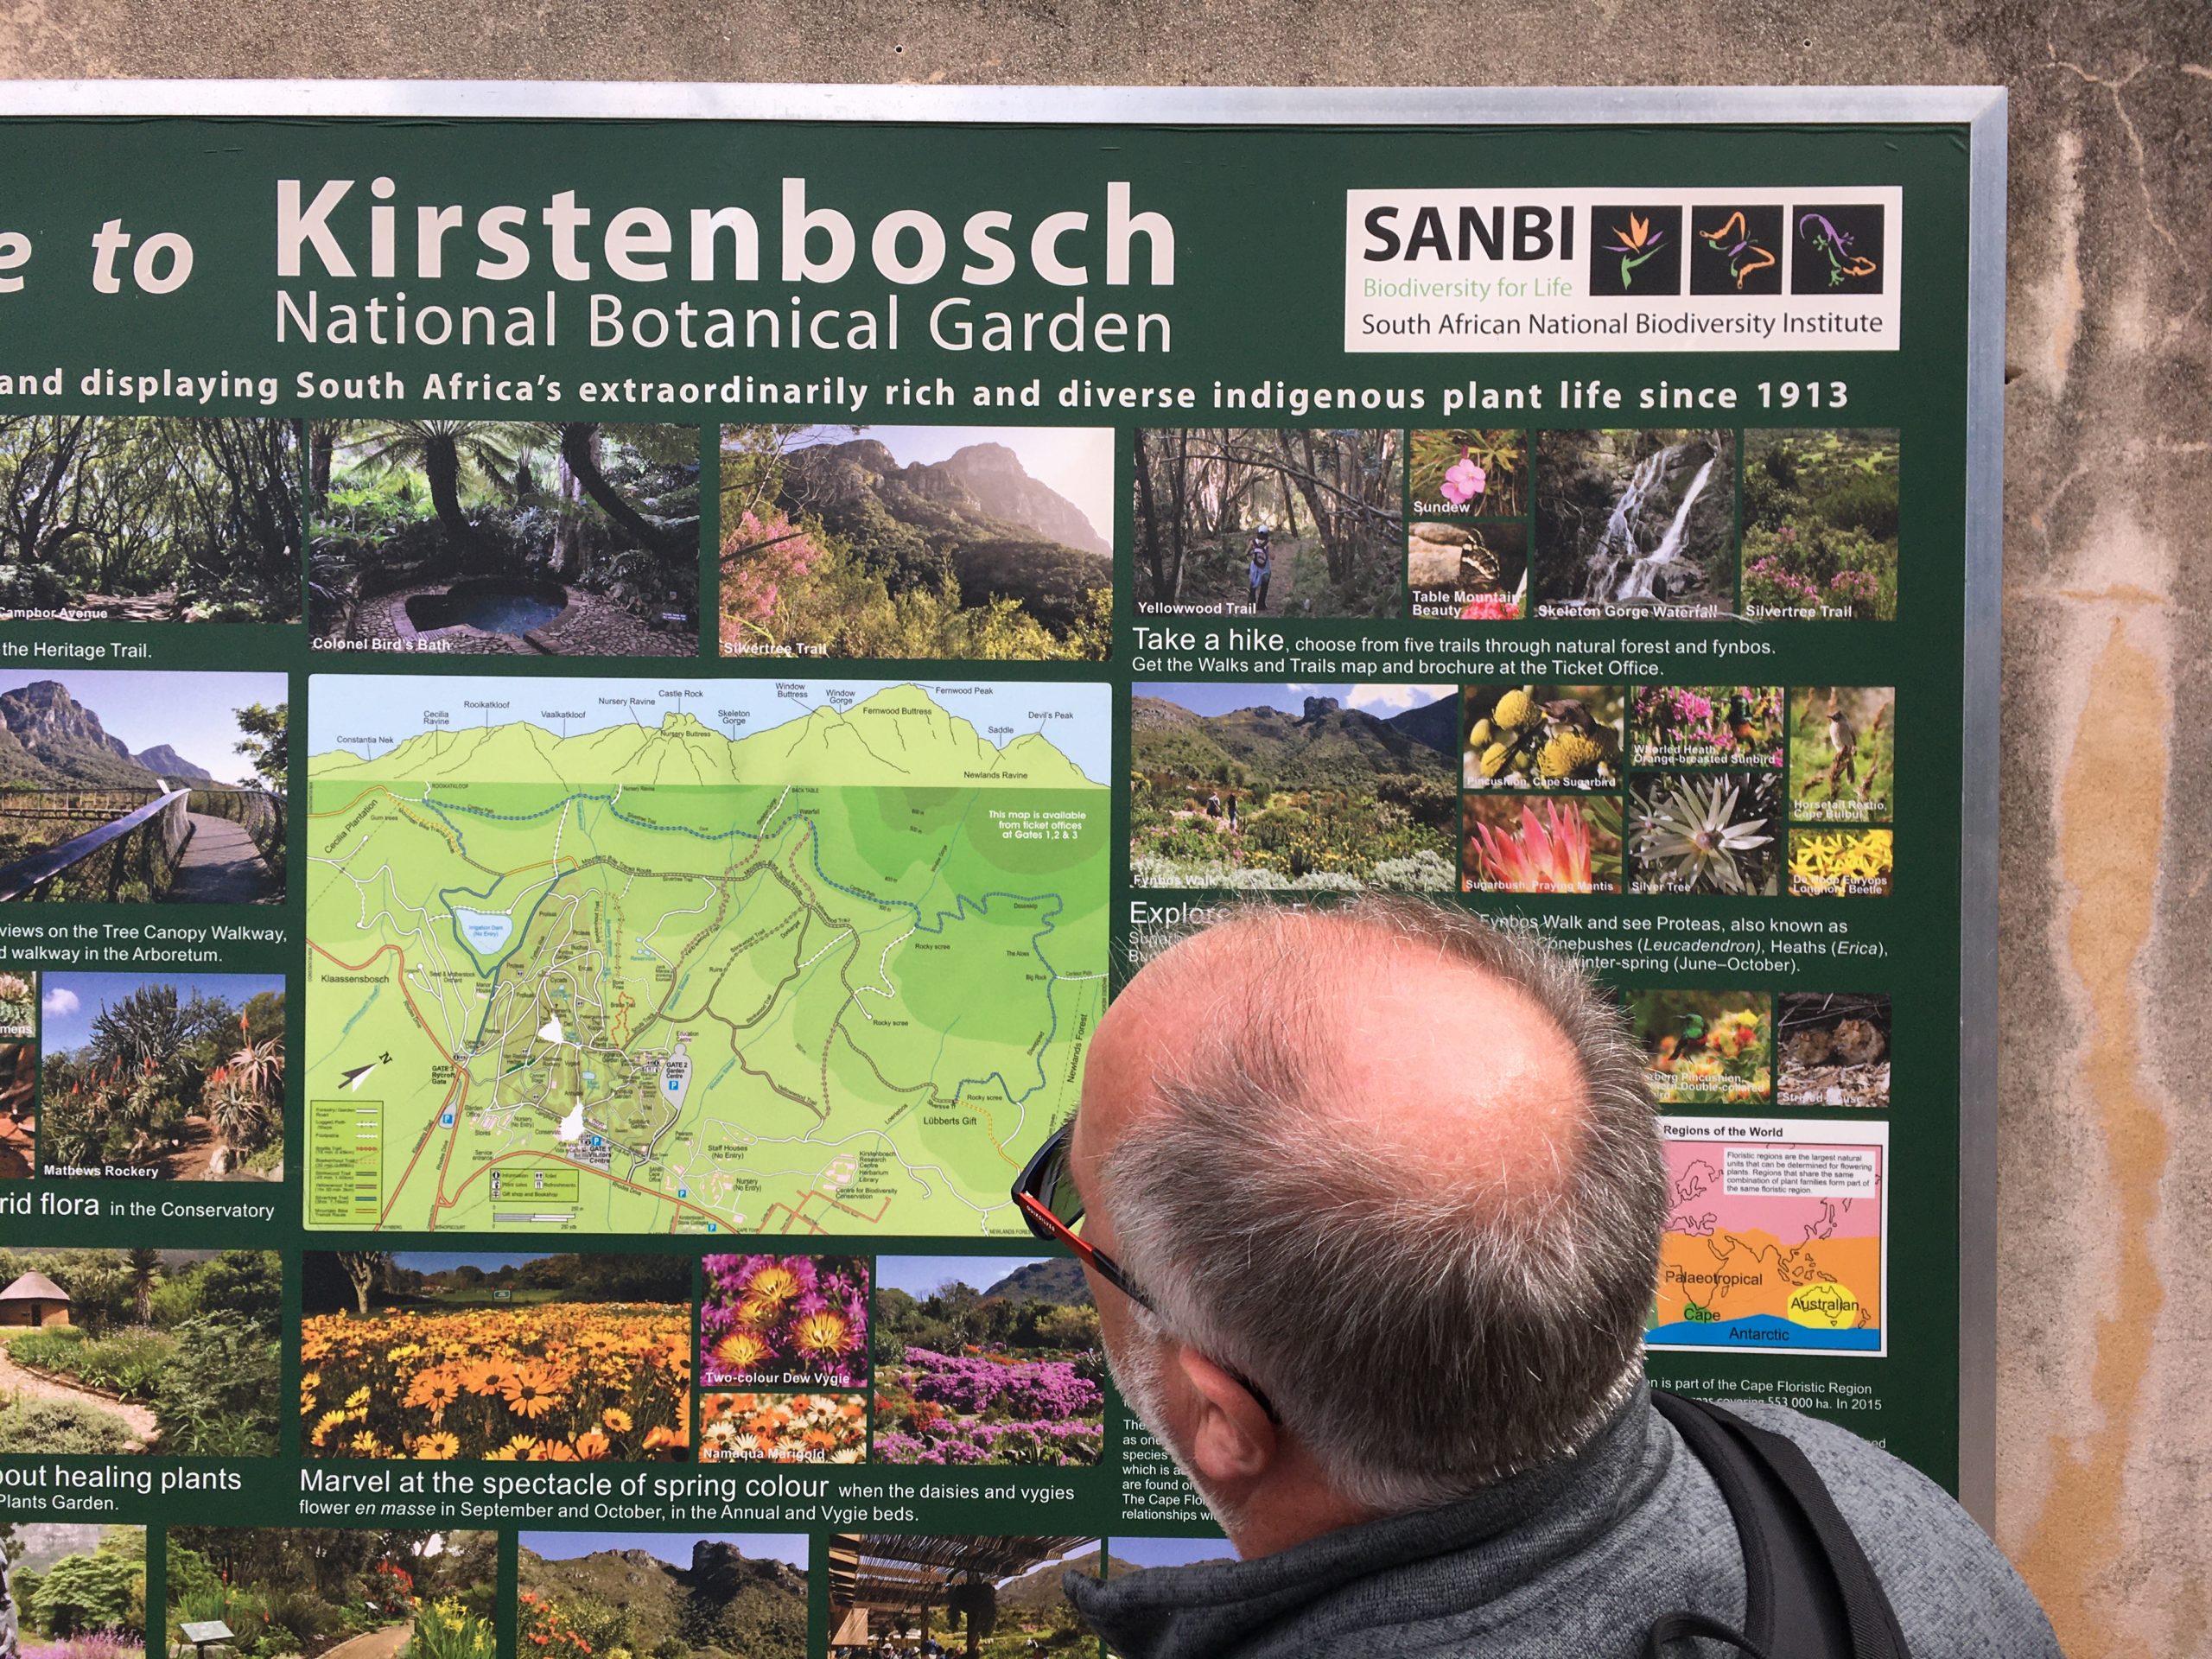 Plenty of informative signage in Kirstenbosch National Botanic Garden, SA